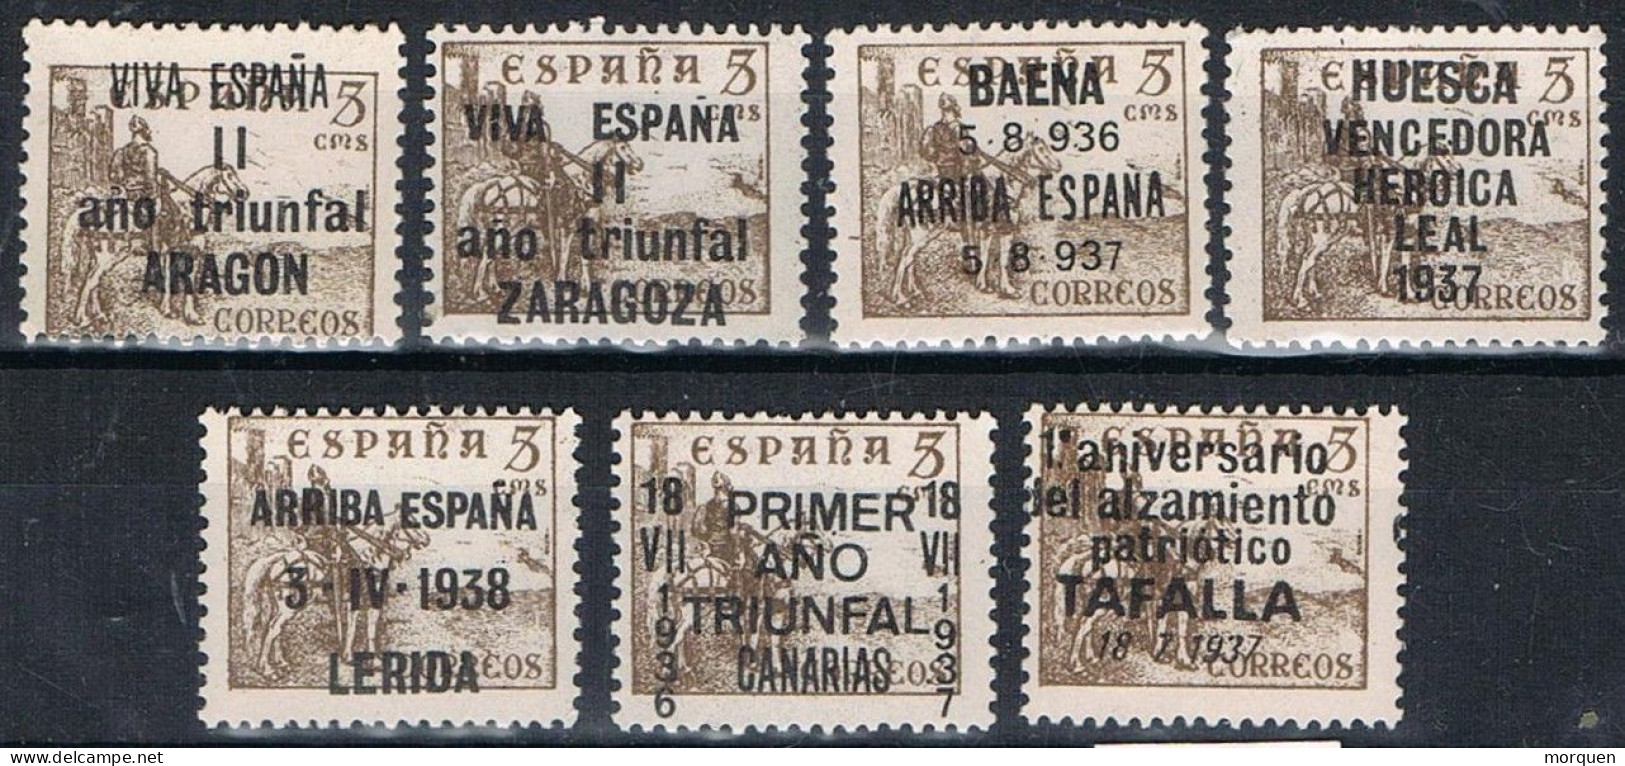 Lote 7 Sellos Patrioticos Guerra Civil, Sobre Valor 5 Cts Cid, Zaragoza, Baena, Huesca, Aragon, Lerida, Tafalla ** - Spanish Civil War Labels